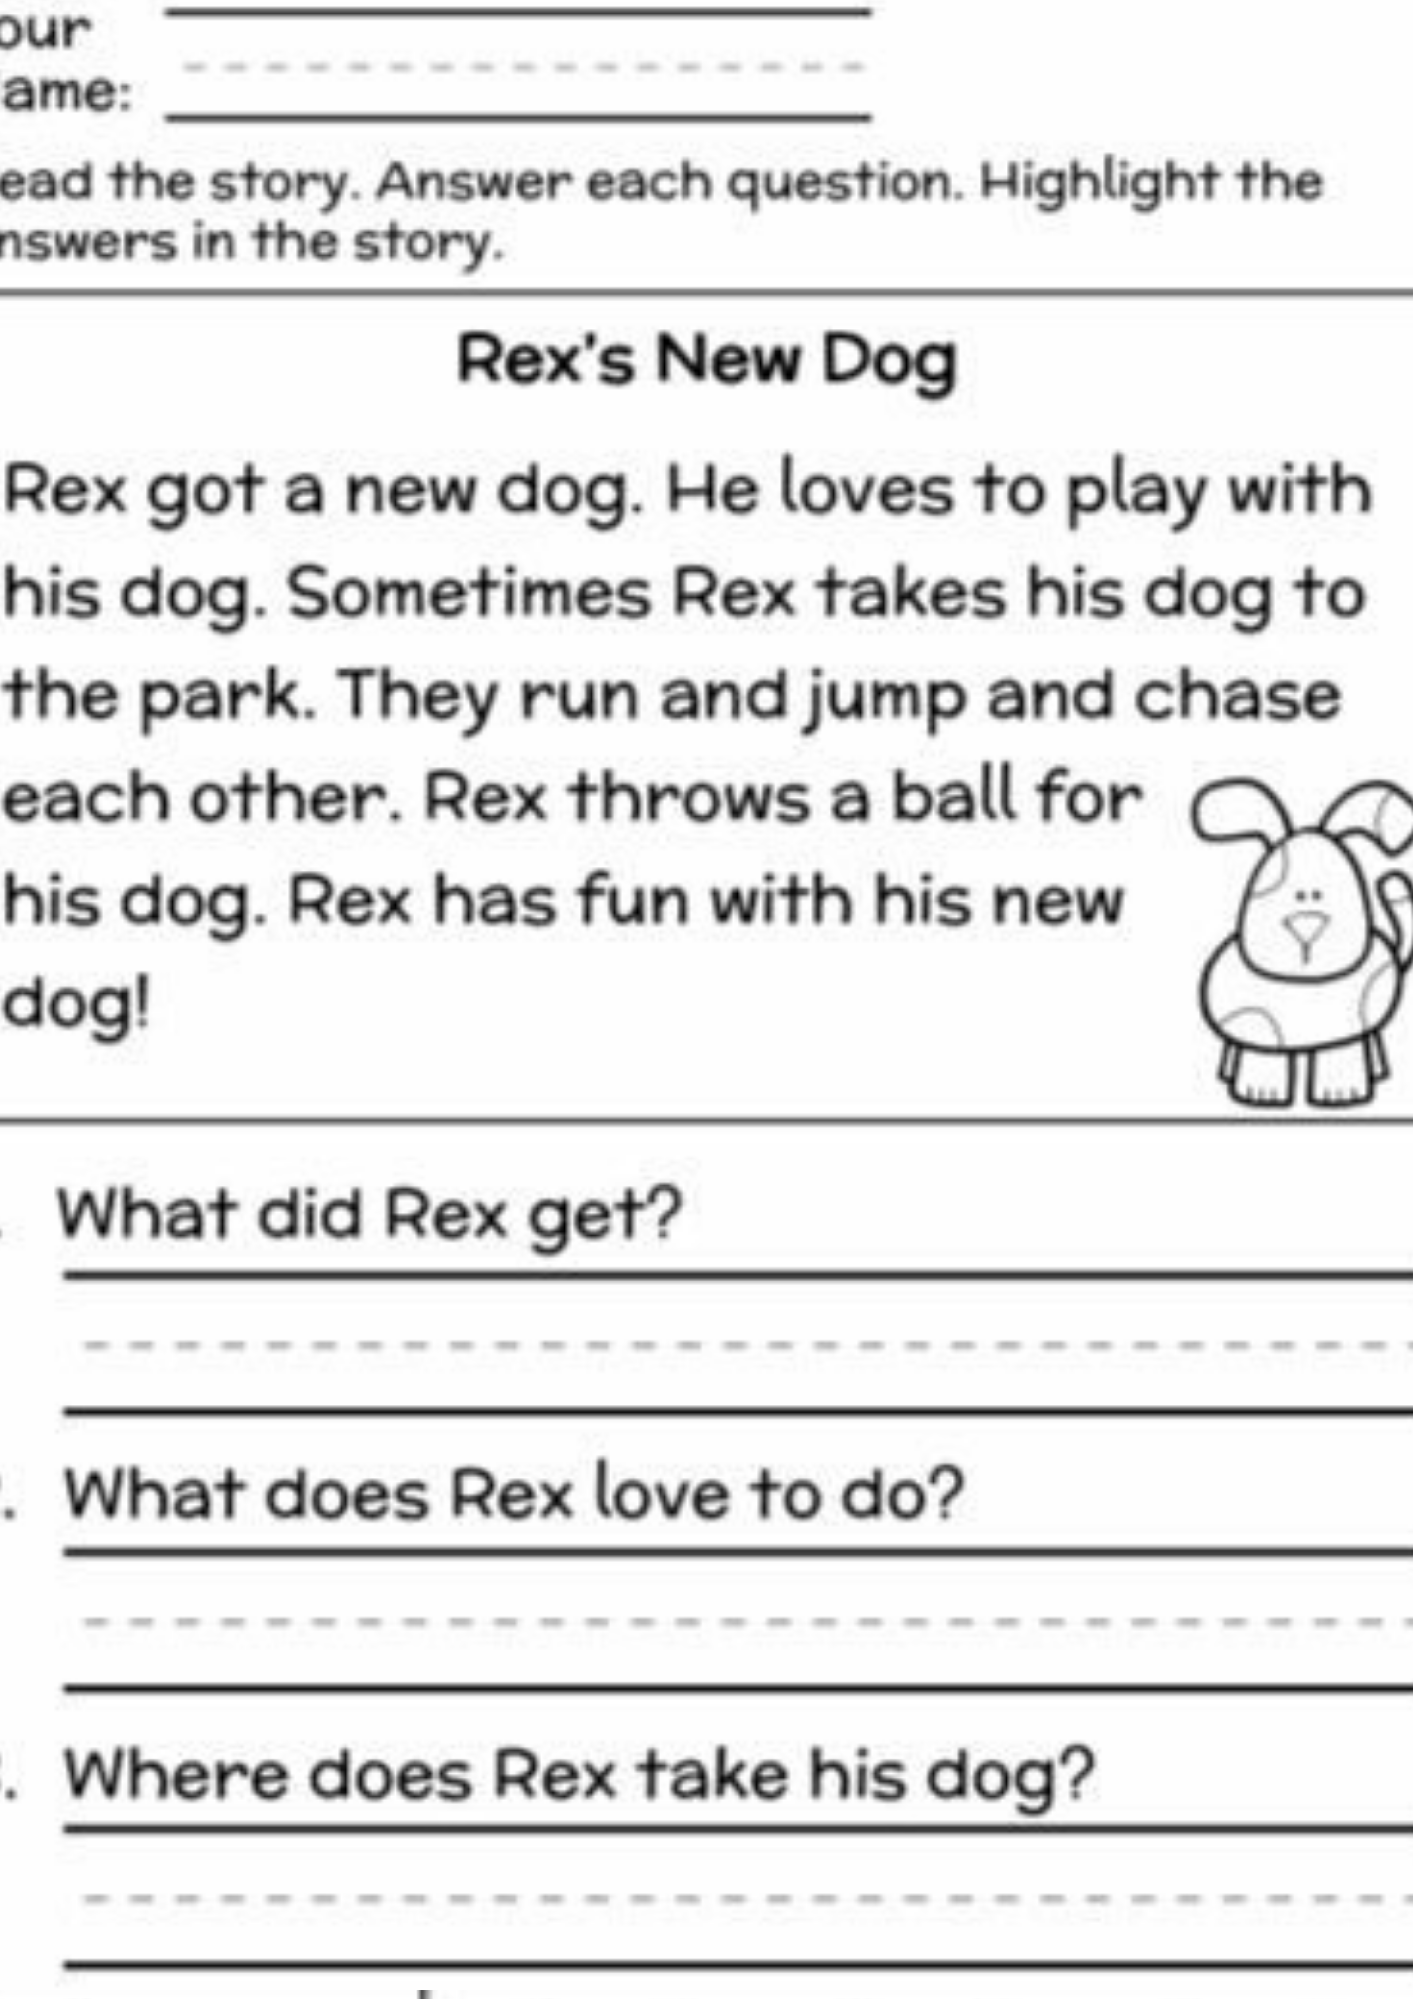 Free Printable First Grade Reading Comprehension Worksheets